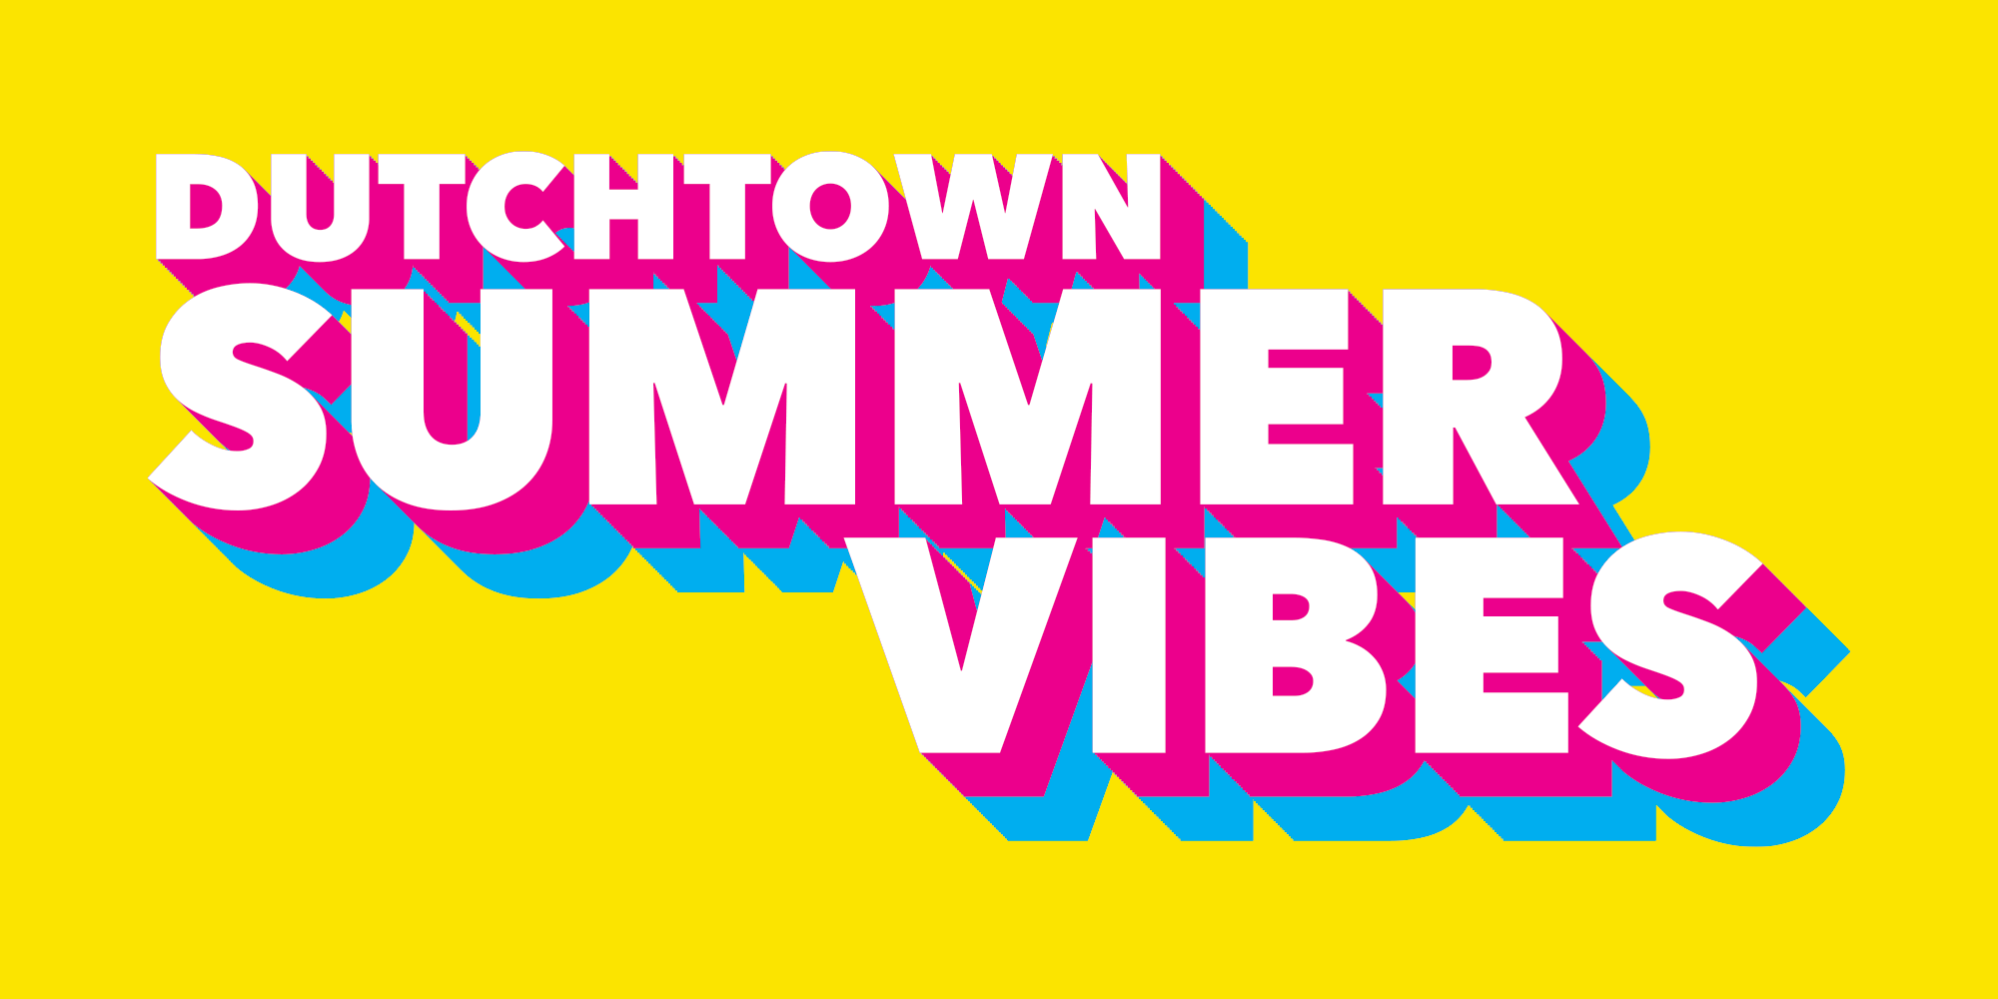 Vibes Summer Dutchtown